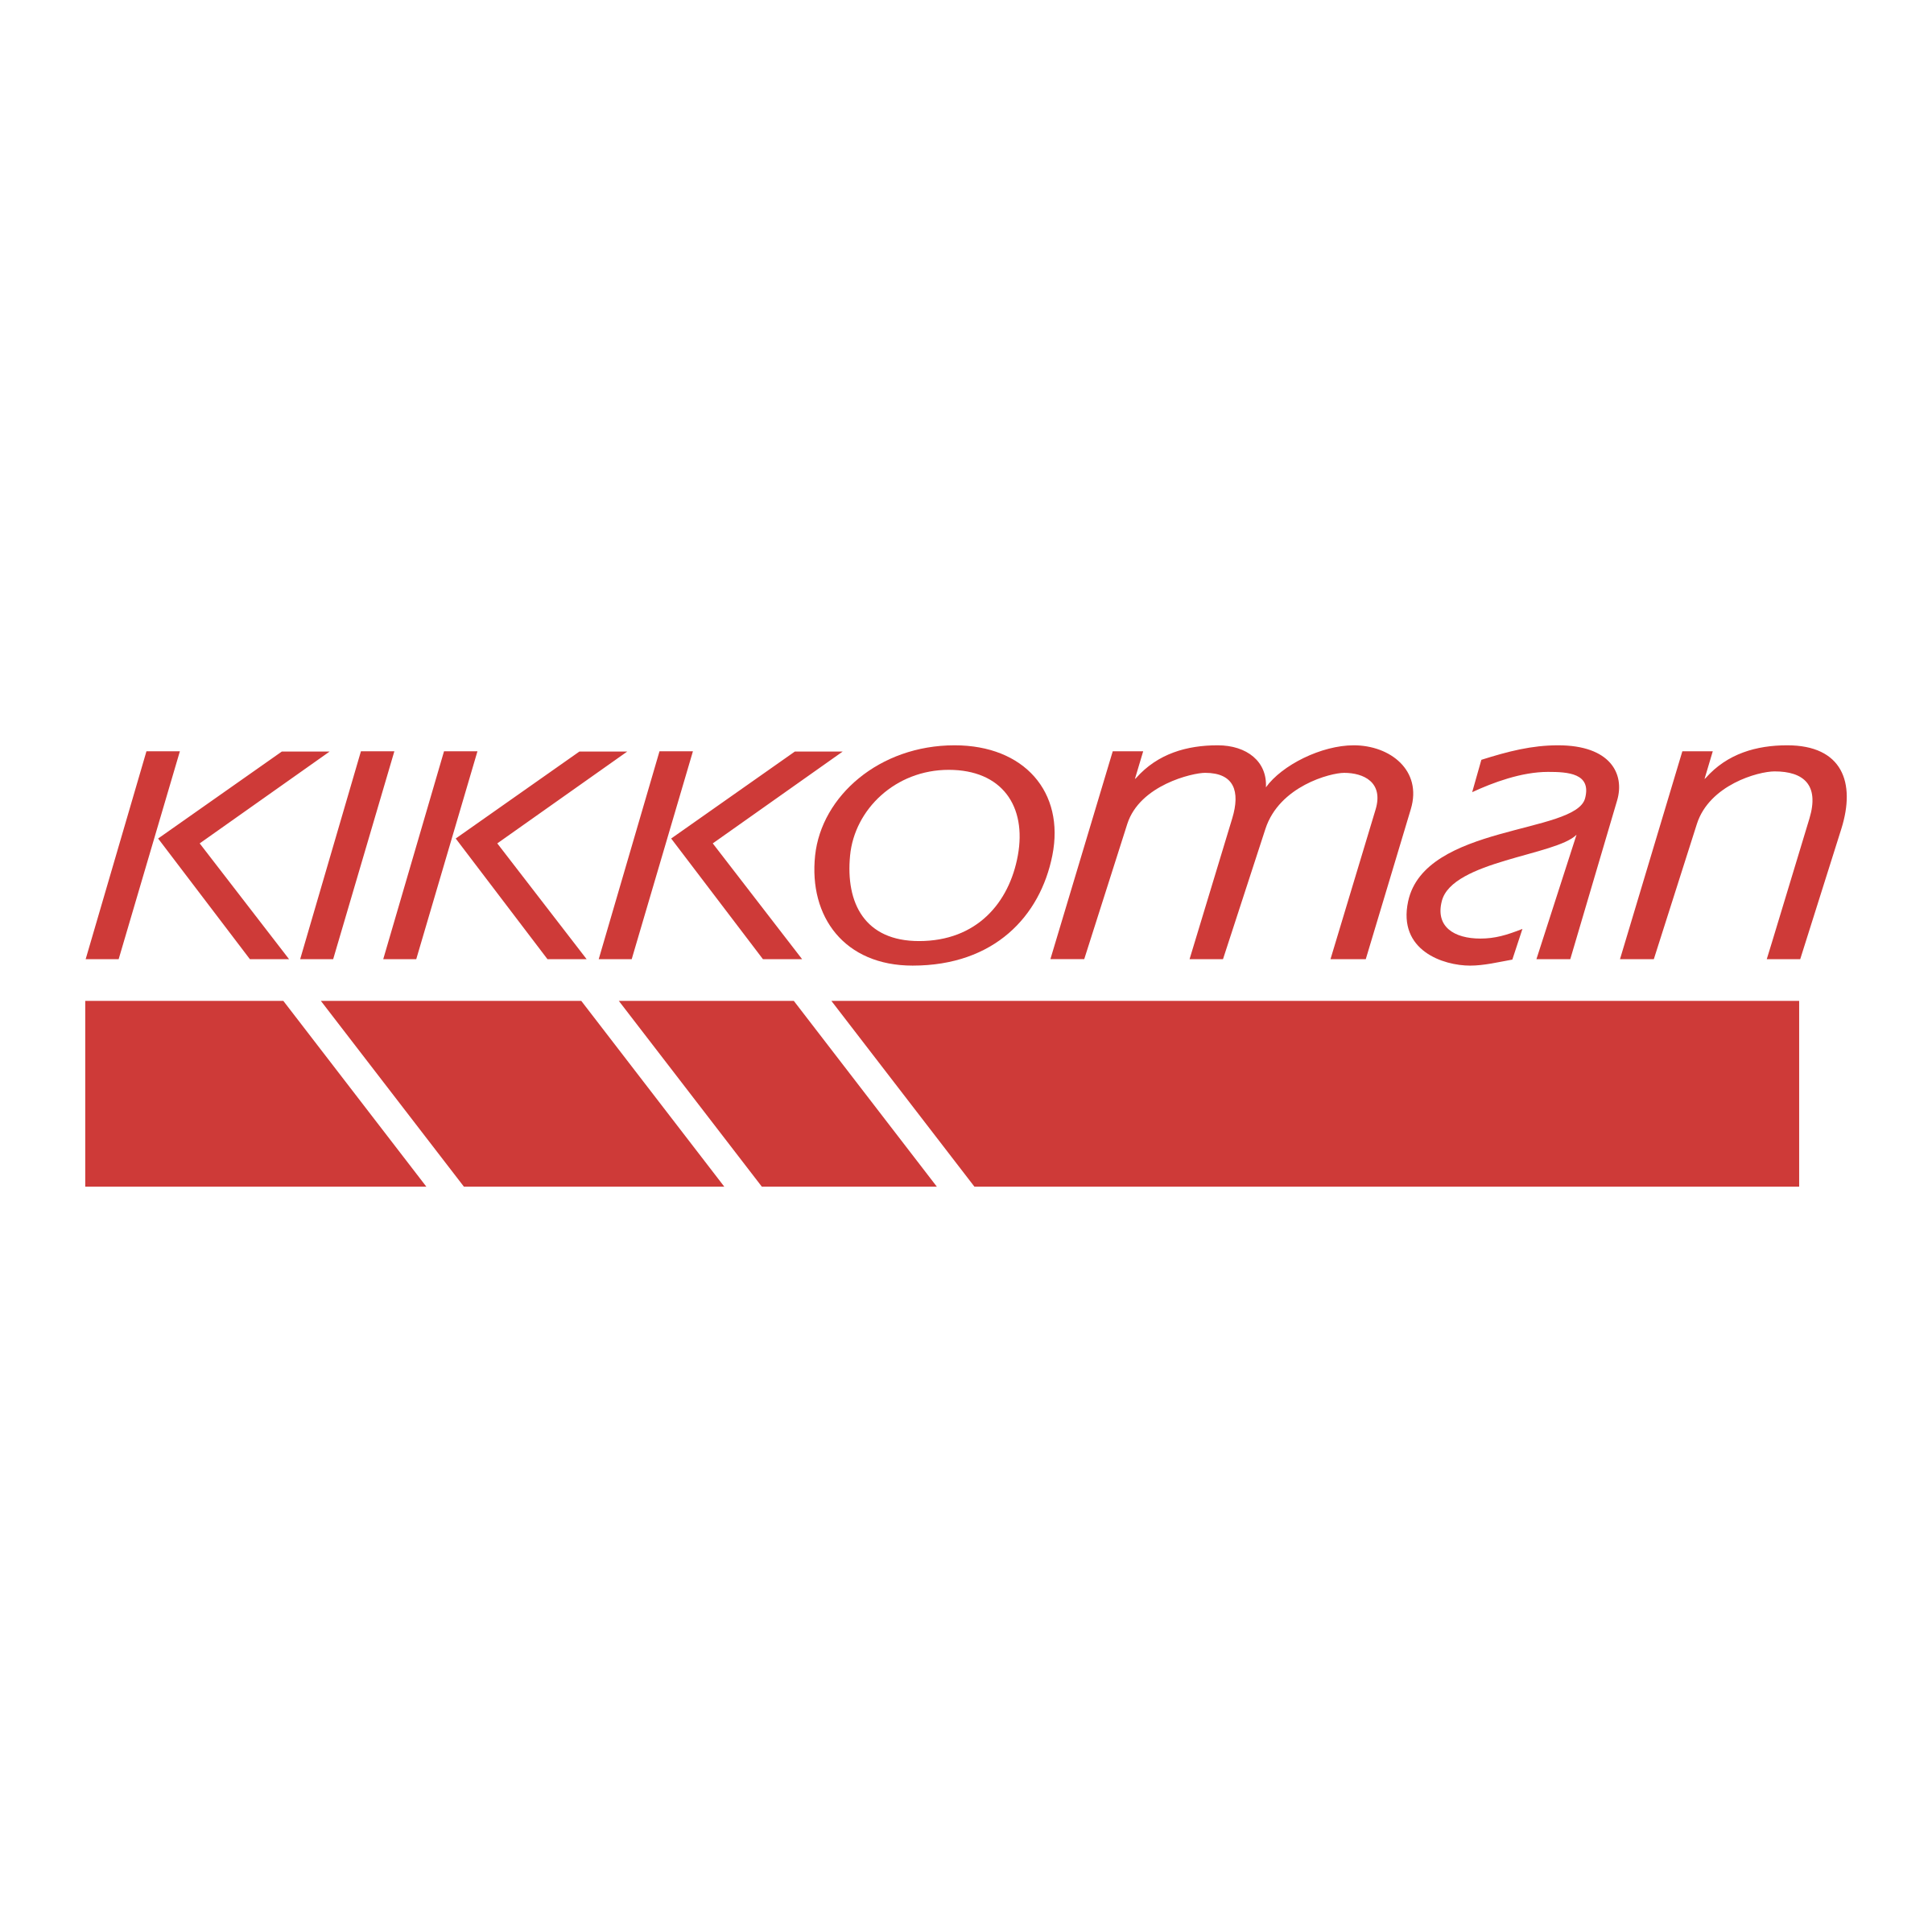 Kikkoman Logo - Kikkoman Logo PNG Transparent & SVG Vector - Freebie Supply